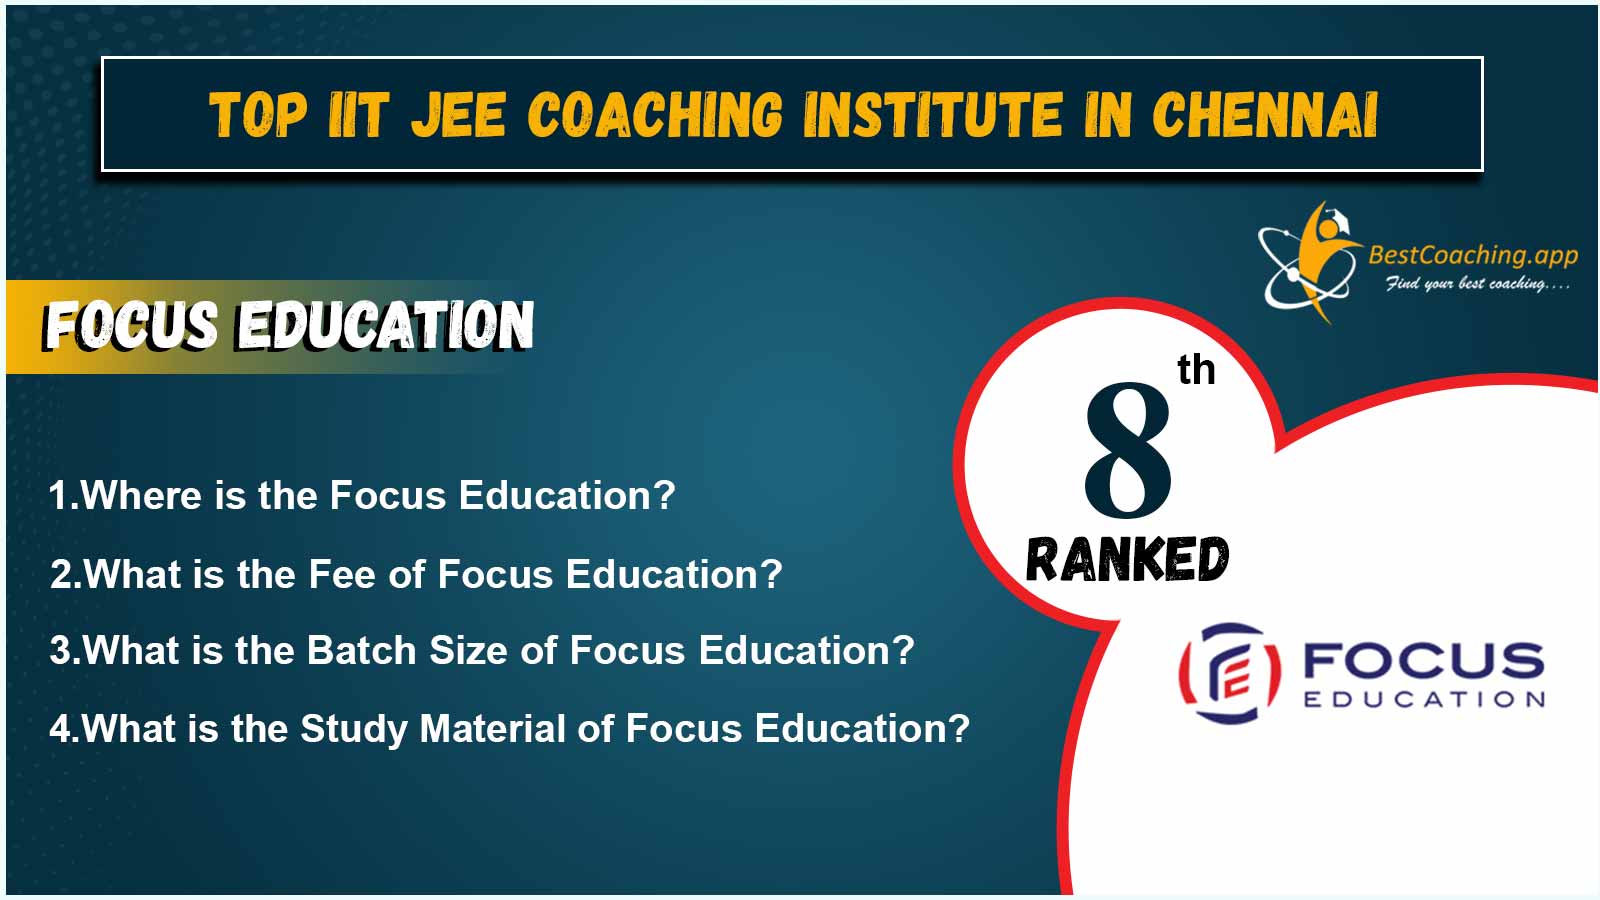 Top IIT JEE Coaching of Chennai